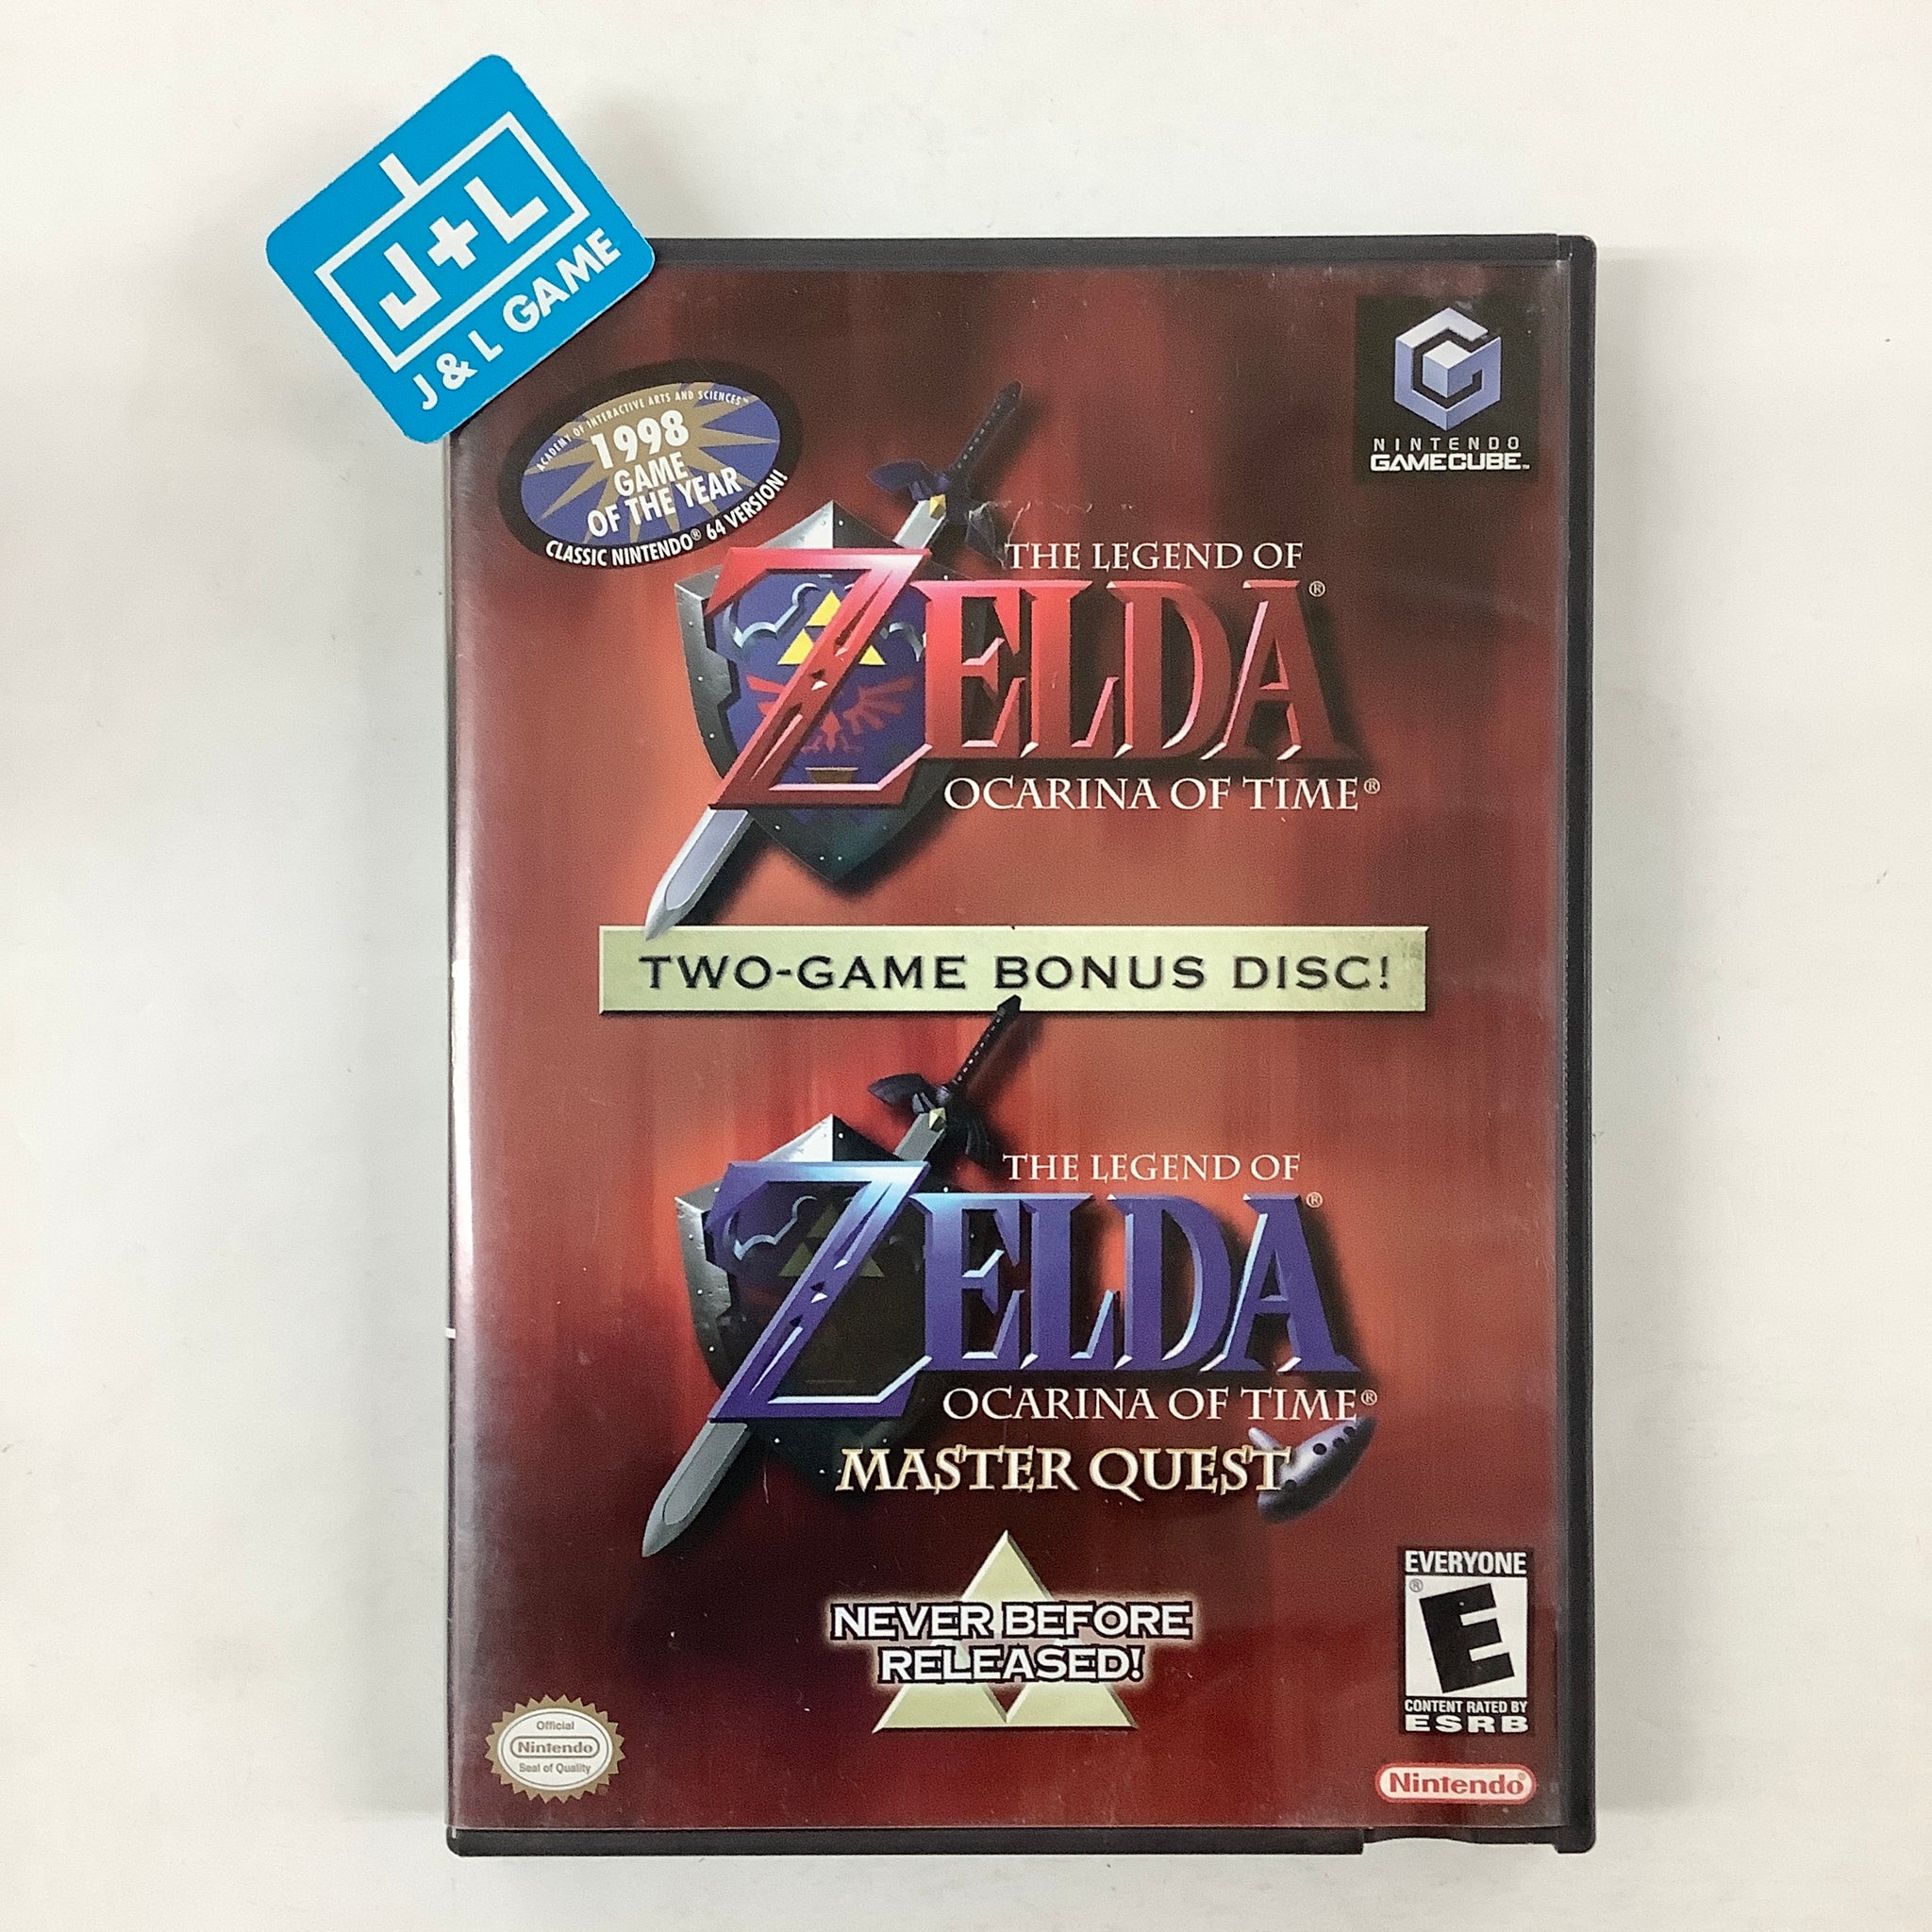 The Legend of Zelda: Ocarina of Time 3D (Master Quest) Part 1